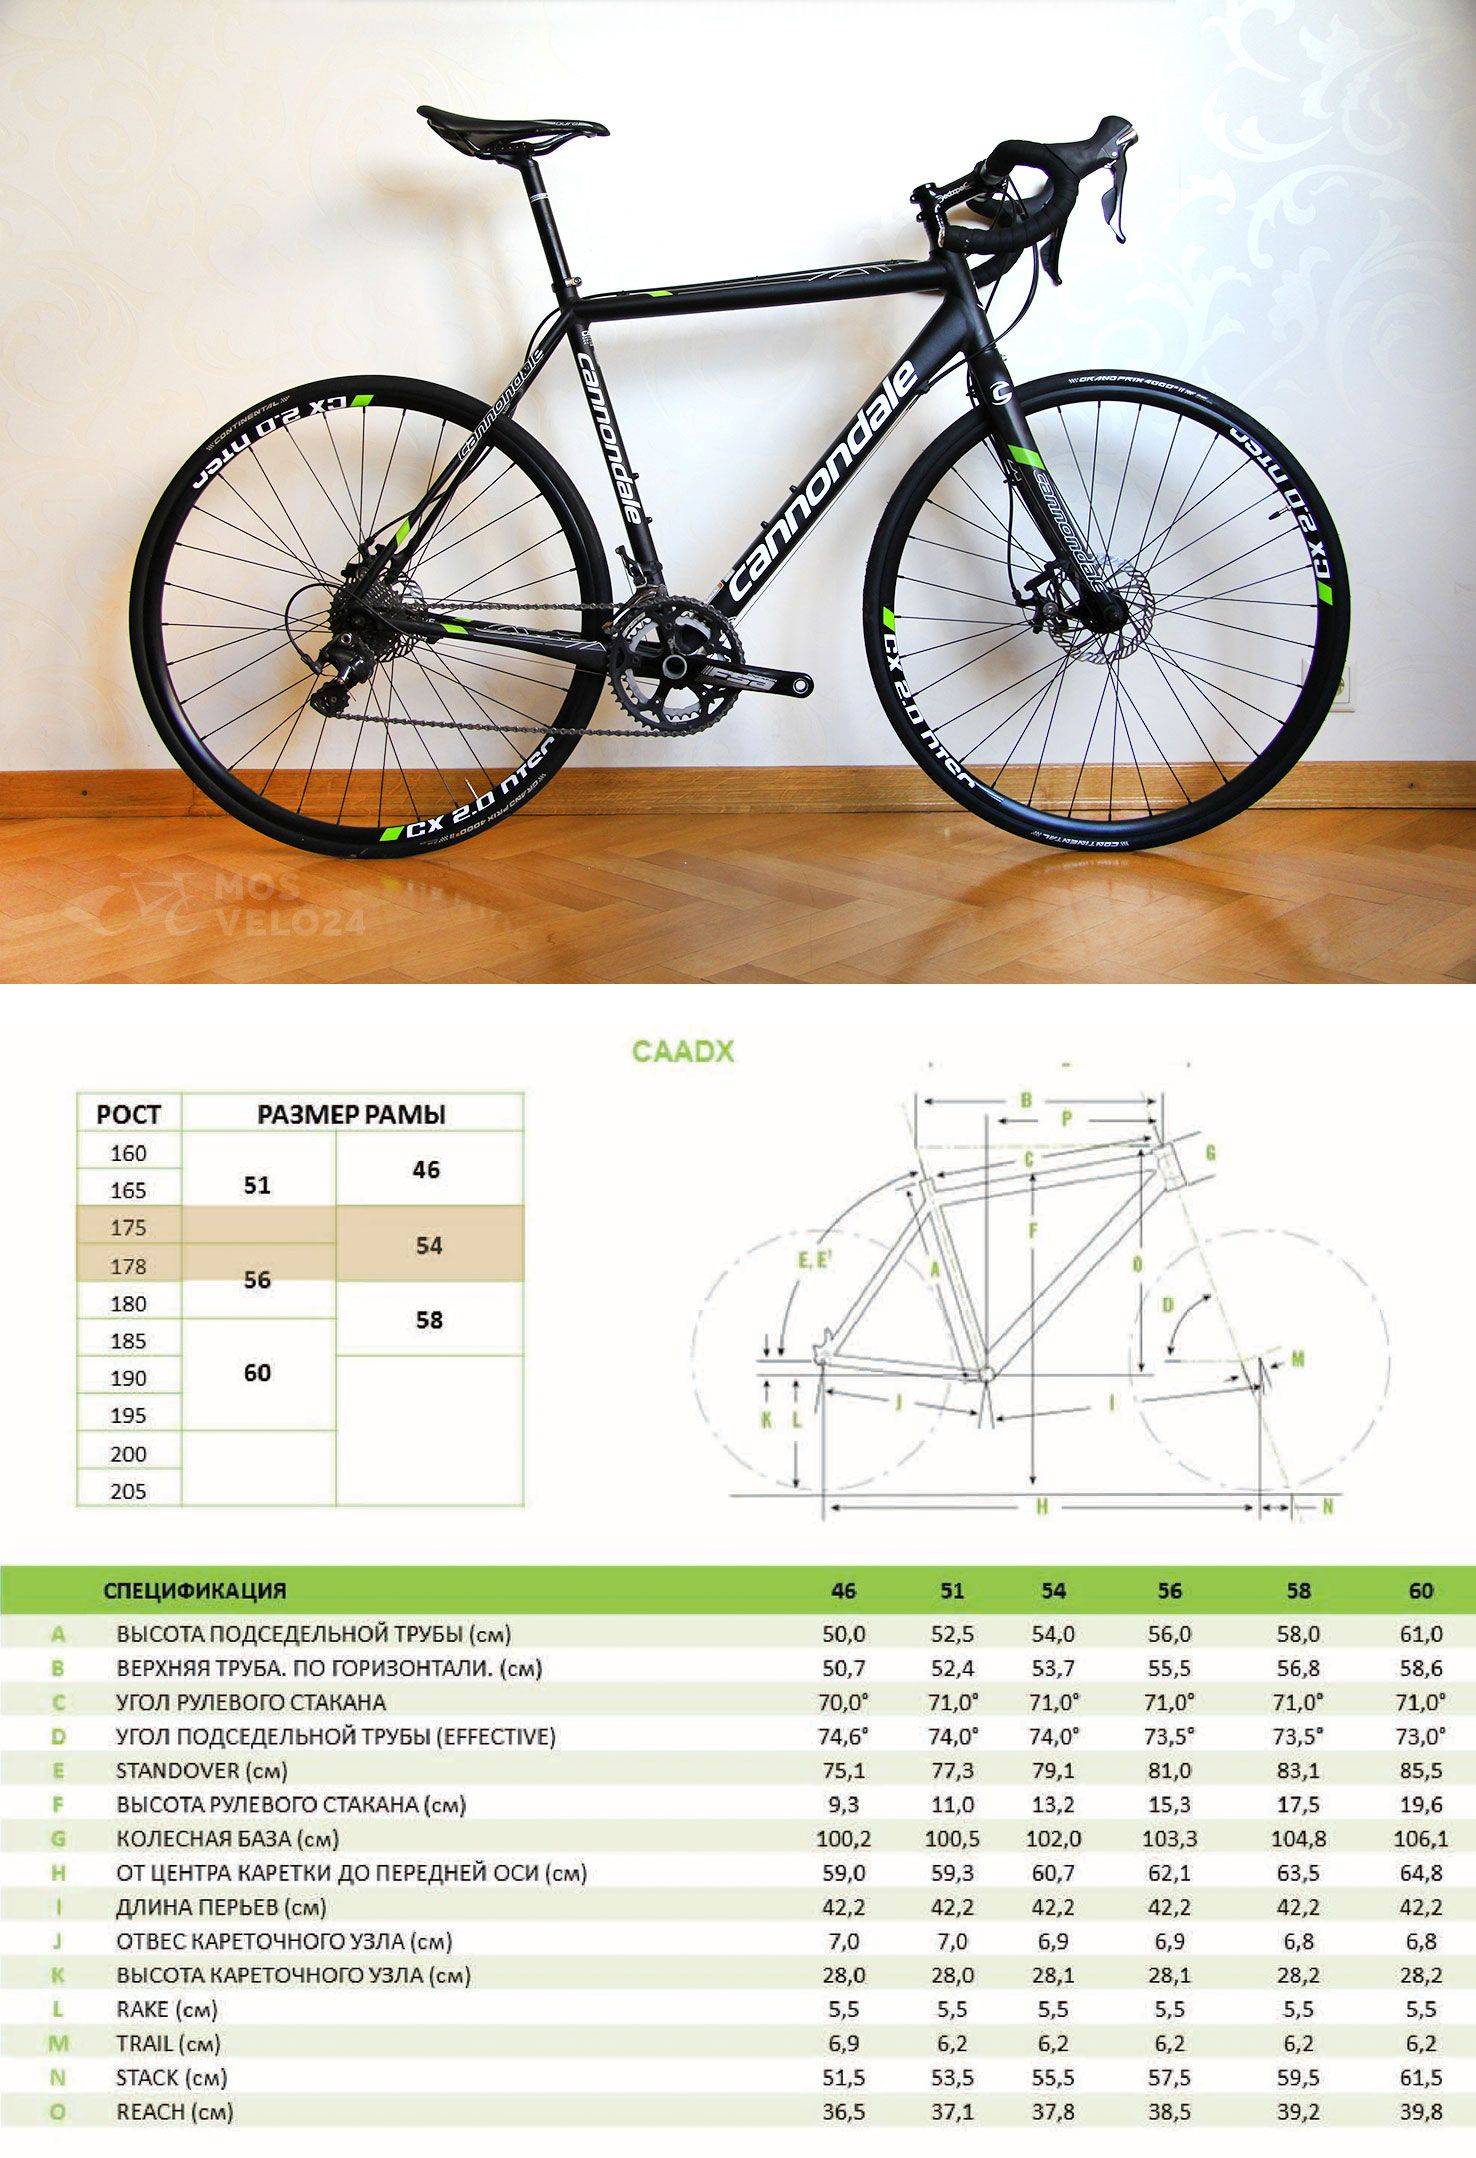 Как подобрать раму велосипеда по росту. Размер рамы ett шоссейного велосипеда. Размер велосипедной рамы по росту рама Cannondale SL S (43 см) 27.5". Giant велосипеды Размерная сетка. Ростовка рам велосипедов Cannondale.